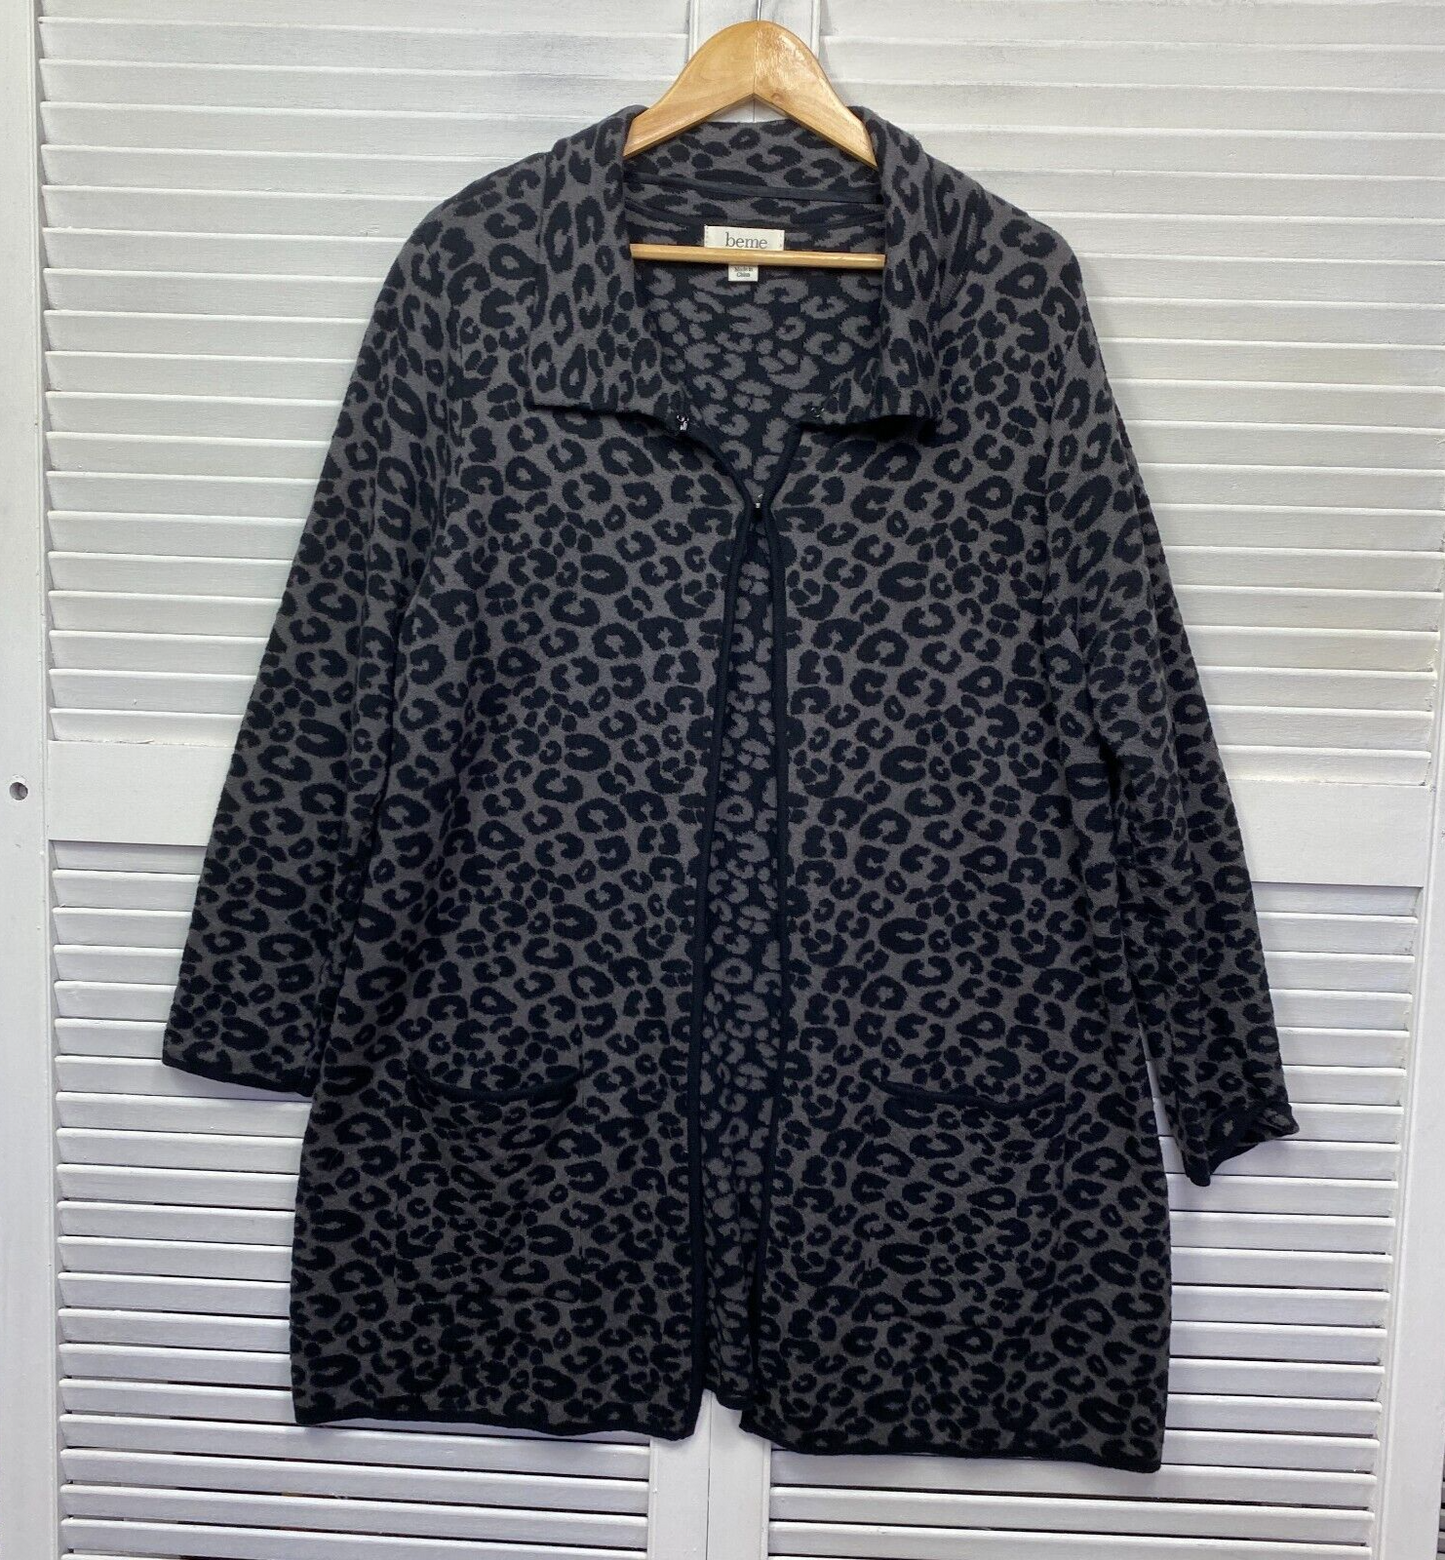 beme Jacket Jumper Size 16 Plus Small Grey Black Long Sleeve Animal Print Preloved